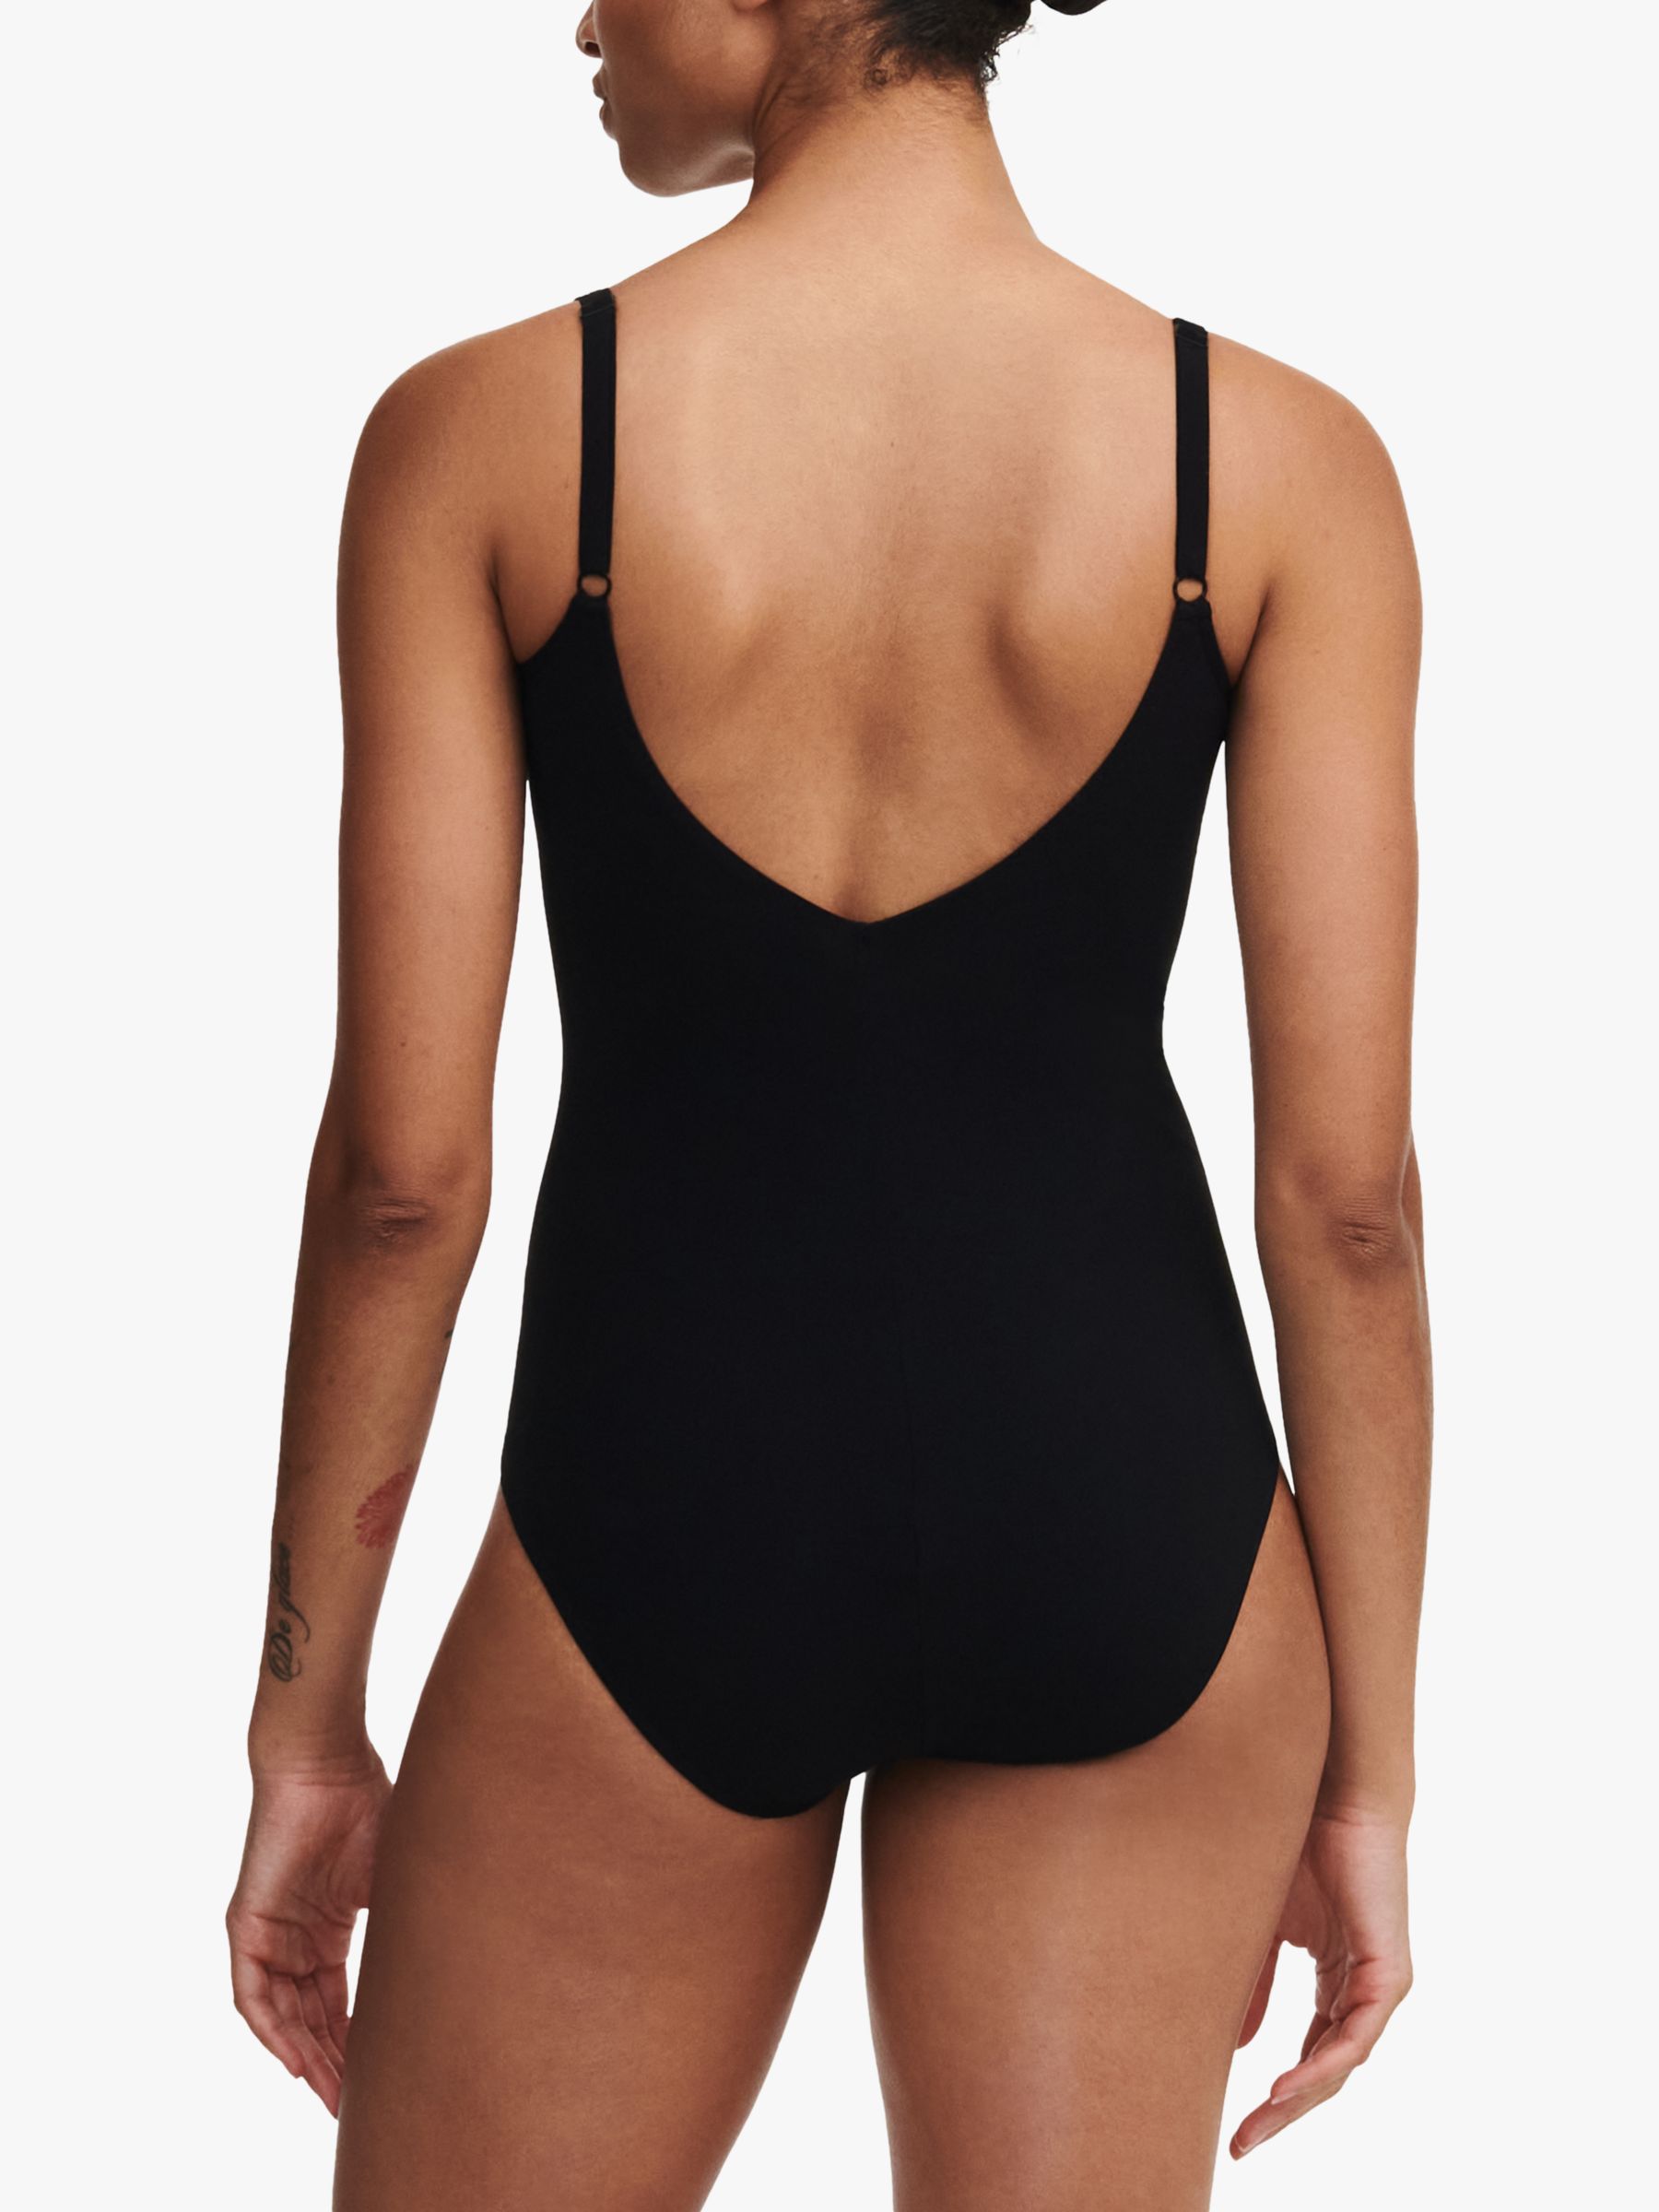 Buy Chantelle Emblem Underwired Swimsuit, Black Online at johnlewis.com